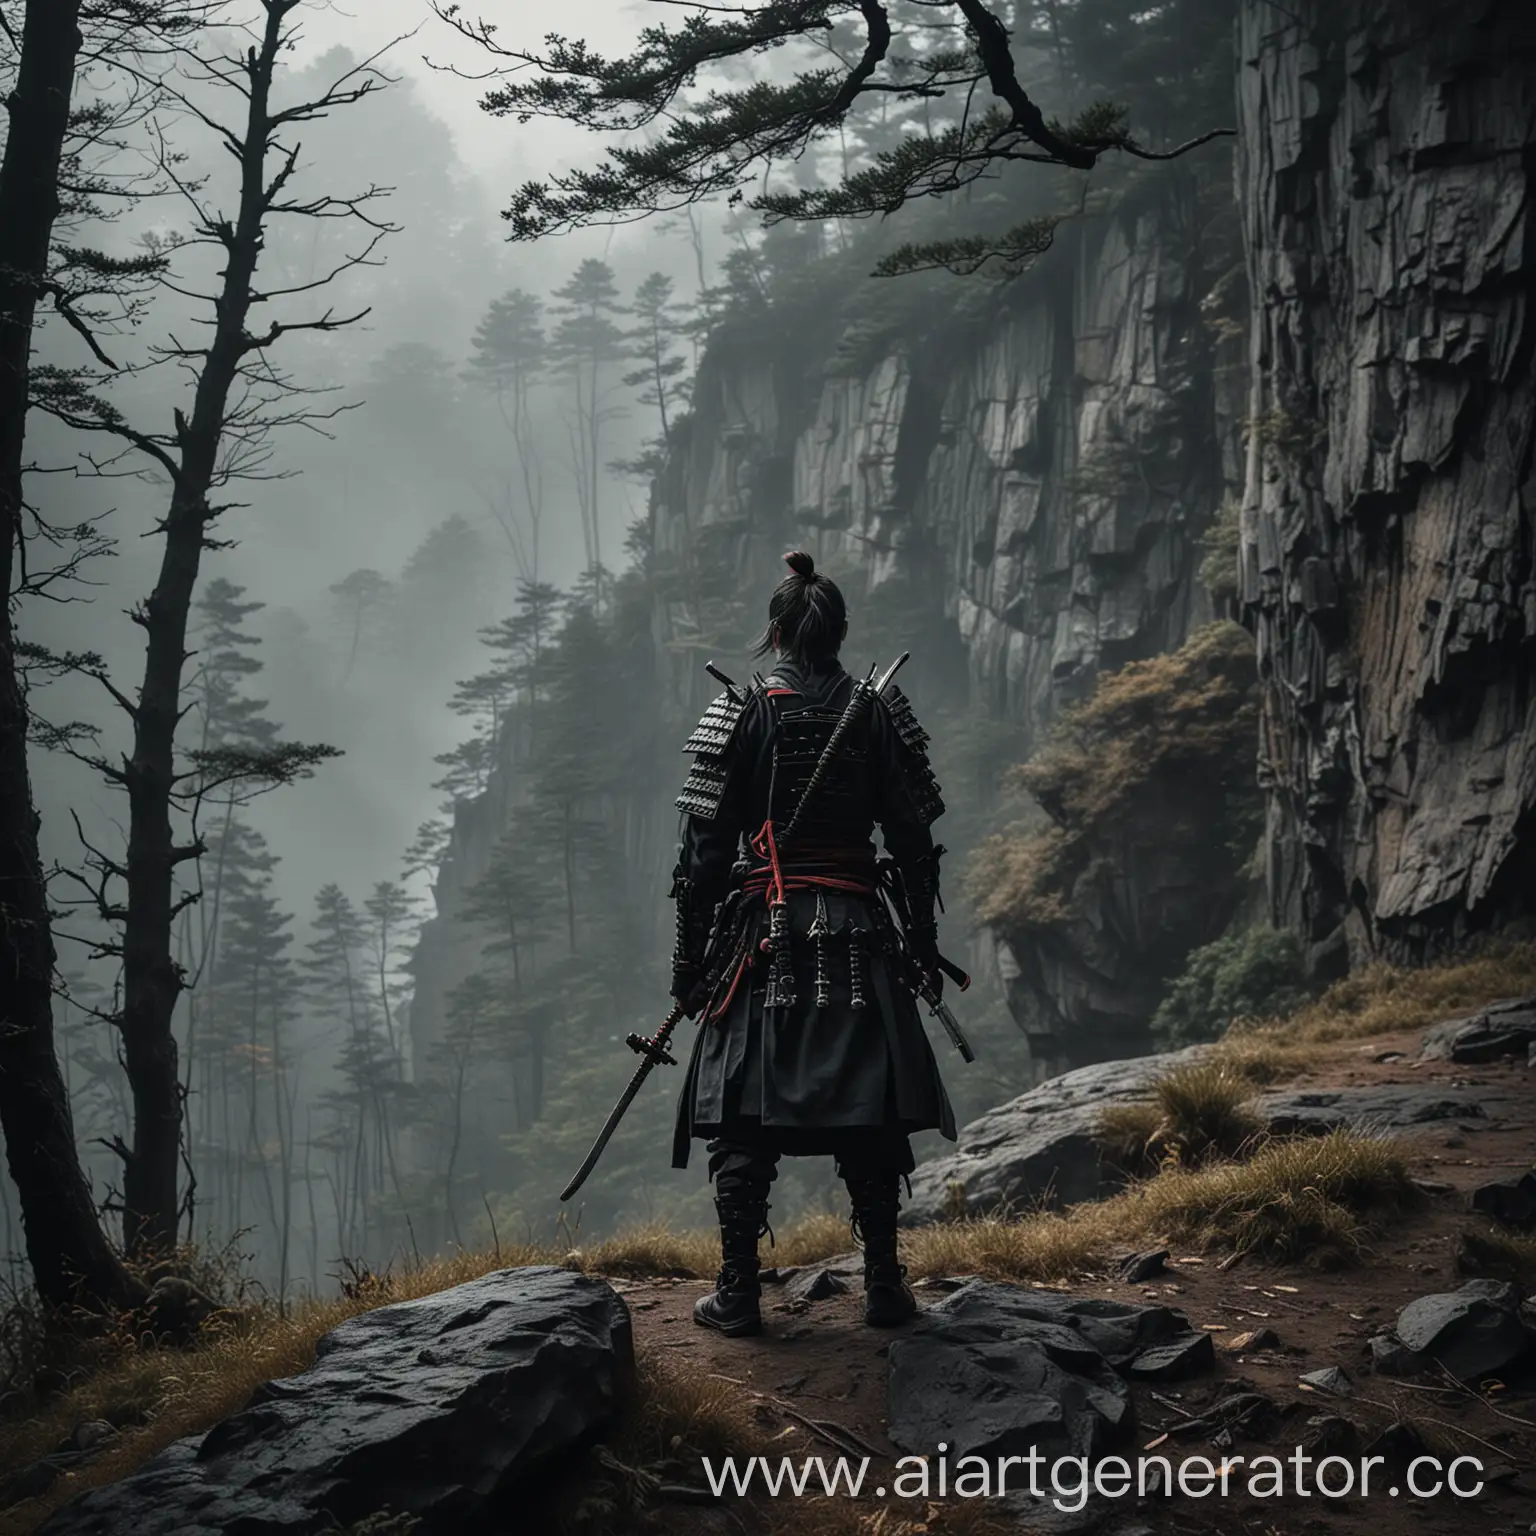 Mysterious-Samurai-Guardian-on-Cliffs-Edge-in-Dark-Forest